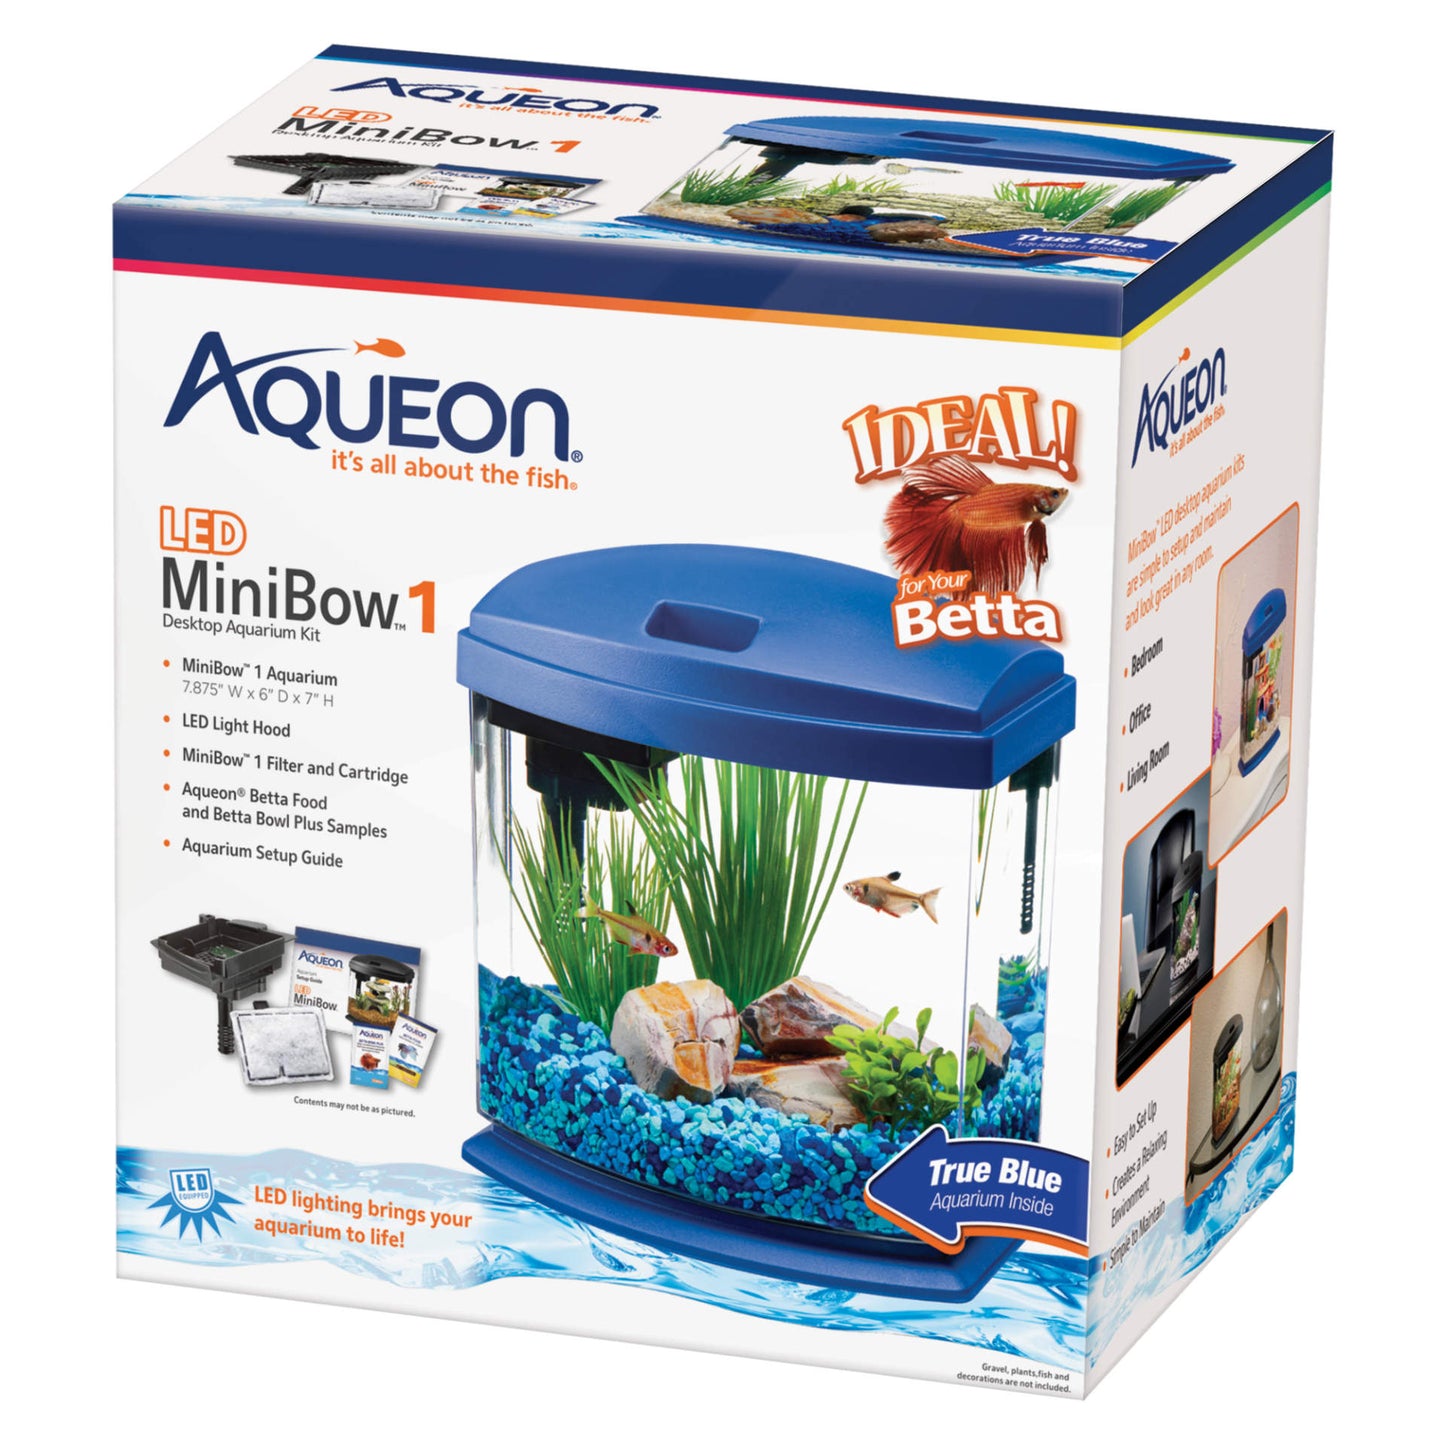 Aqueon MiniBow LED Aquarium Kit 1 Gallon